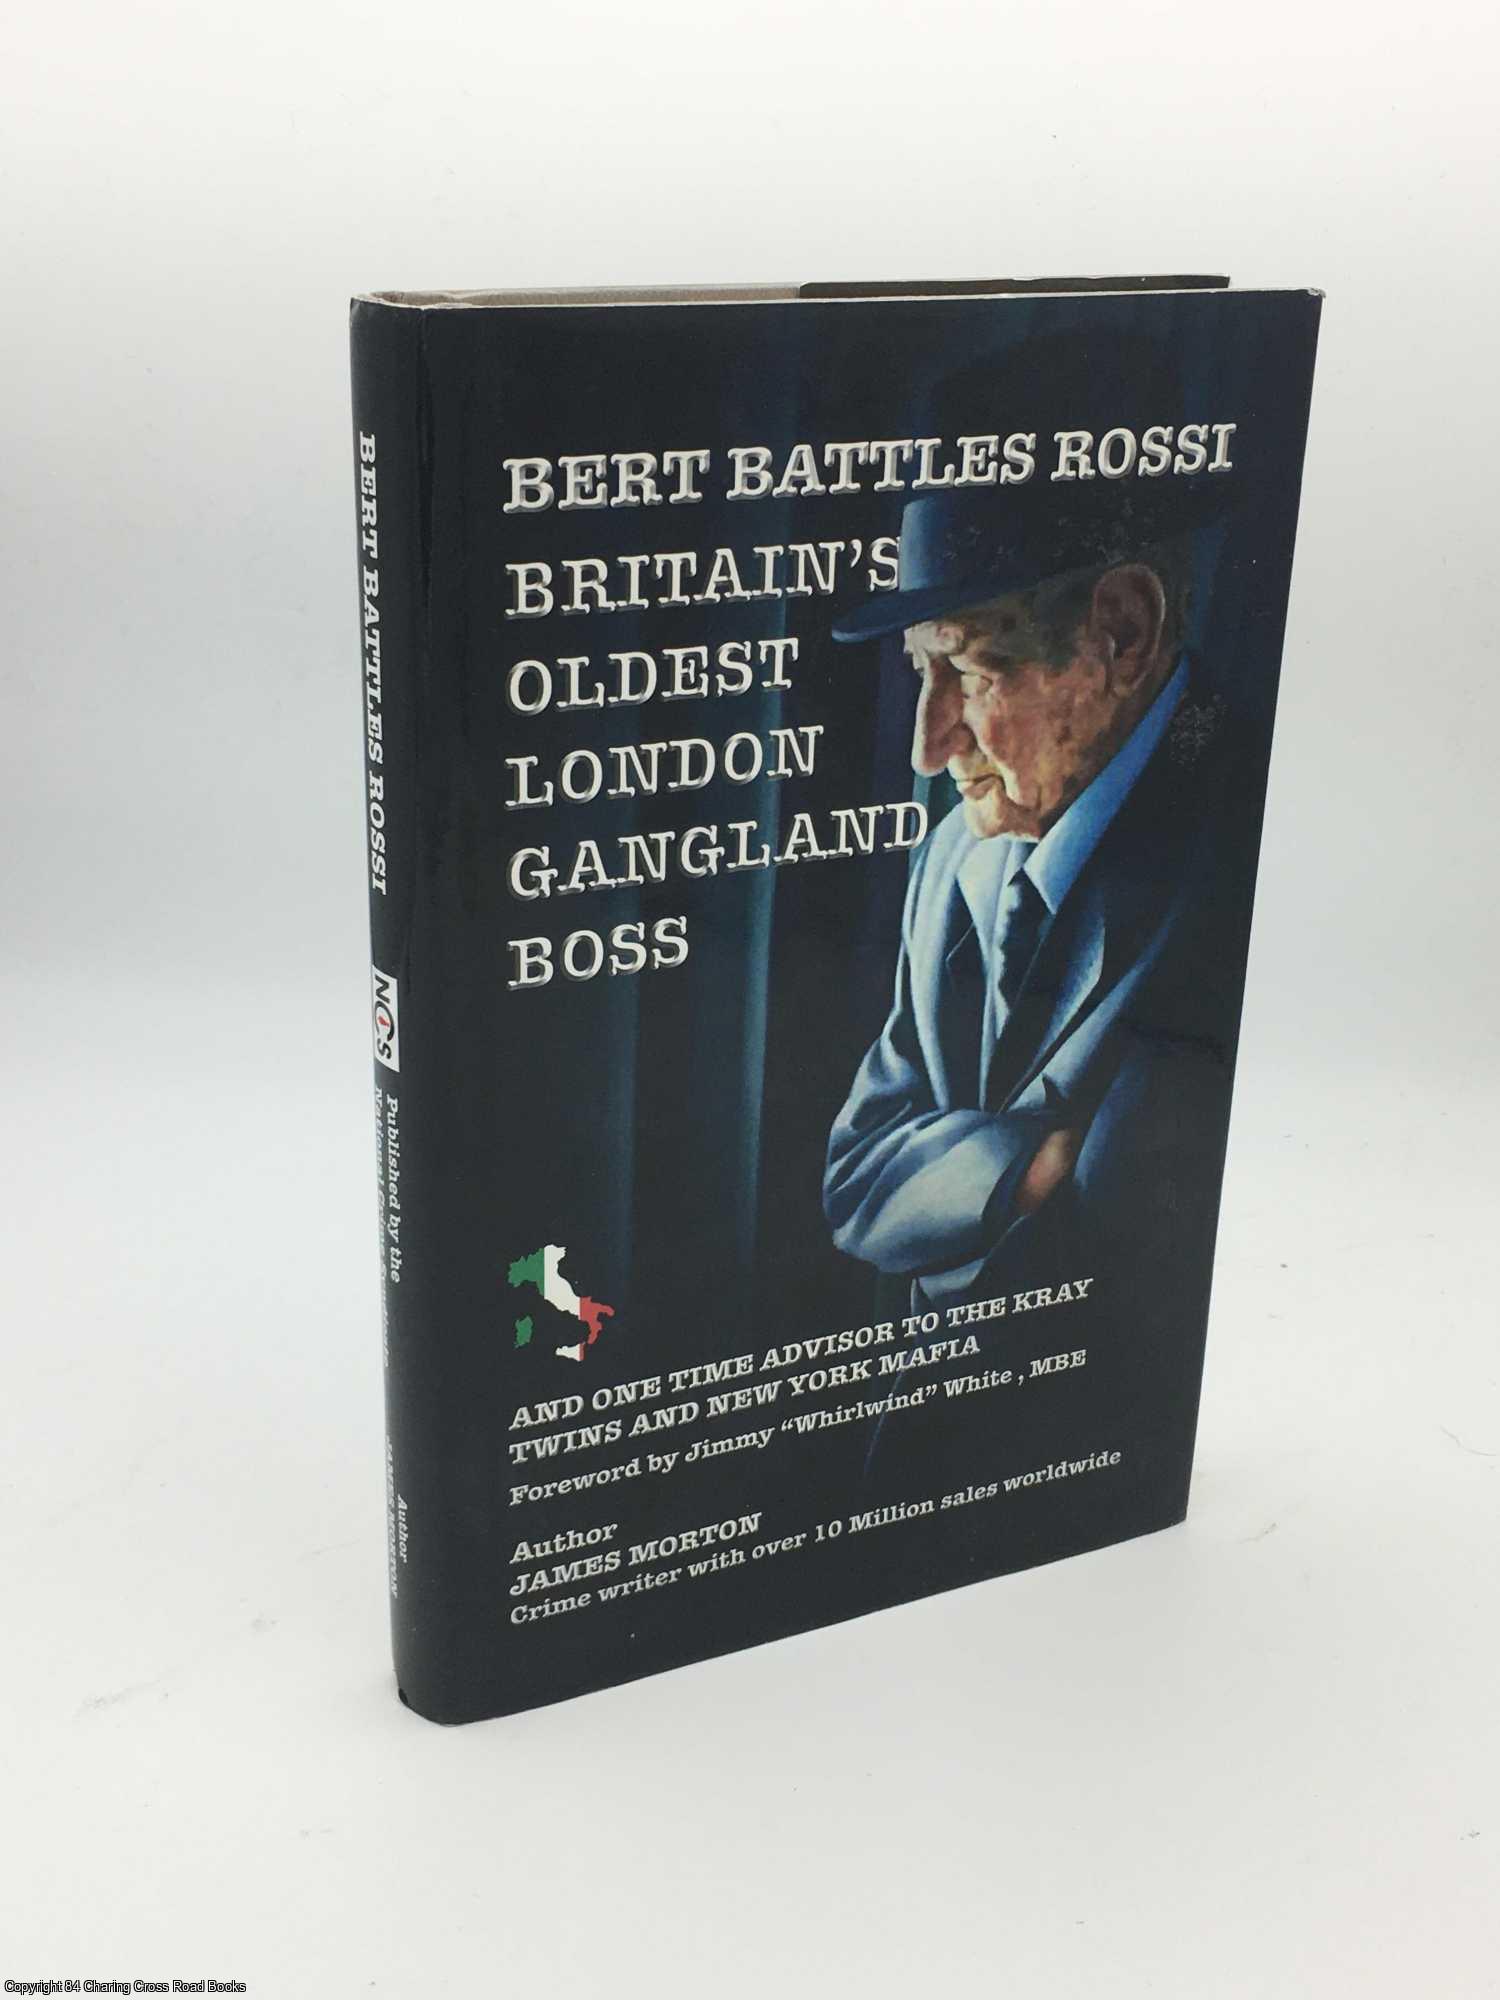 White, Jimmy; Morton, James - Bert Rossi: Britain's Oldest London Gangland Boss